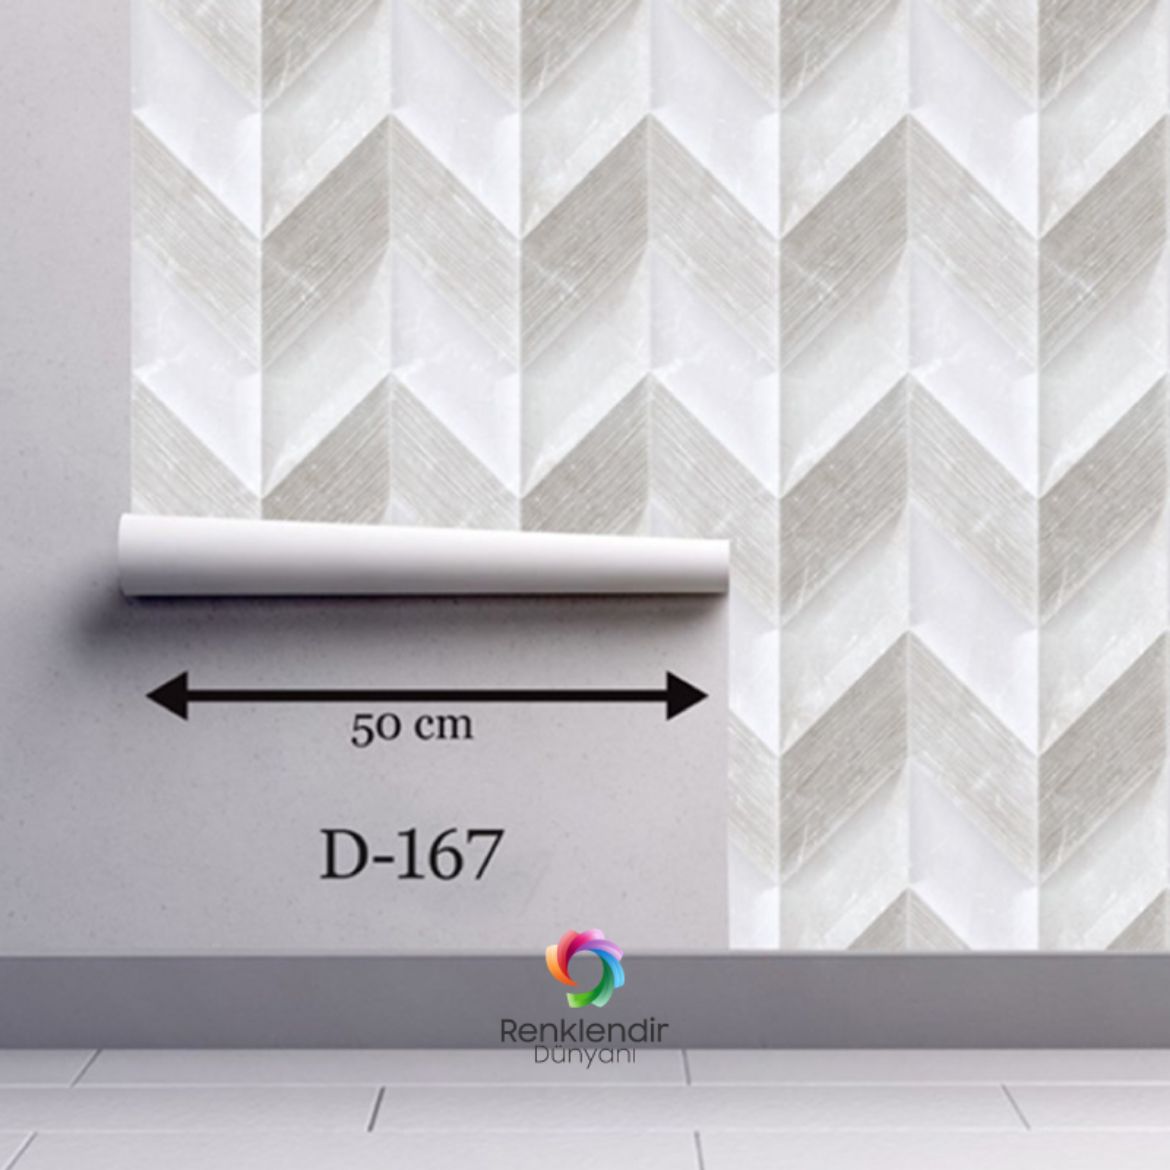  Zigzag Desenli Duvar Kaplama D-167 resmi